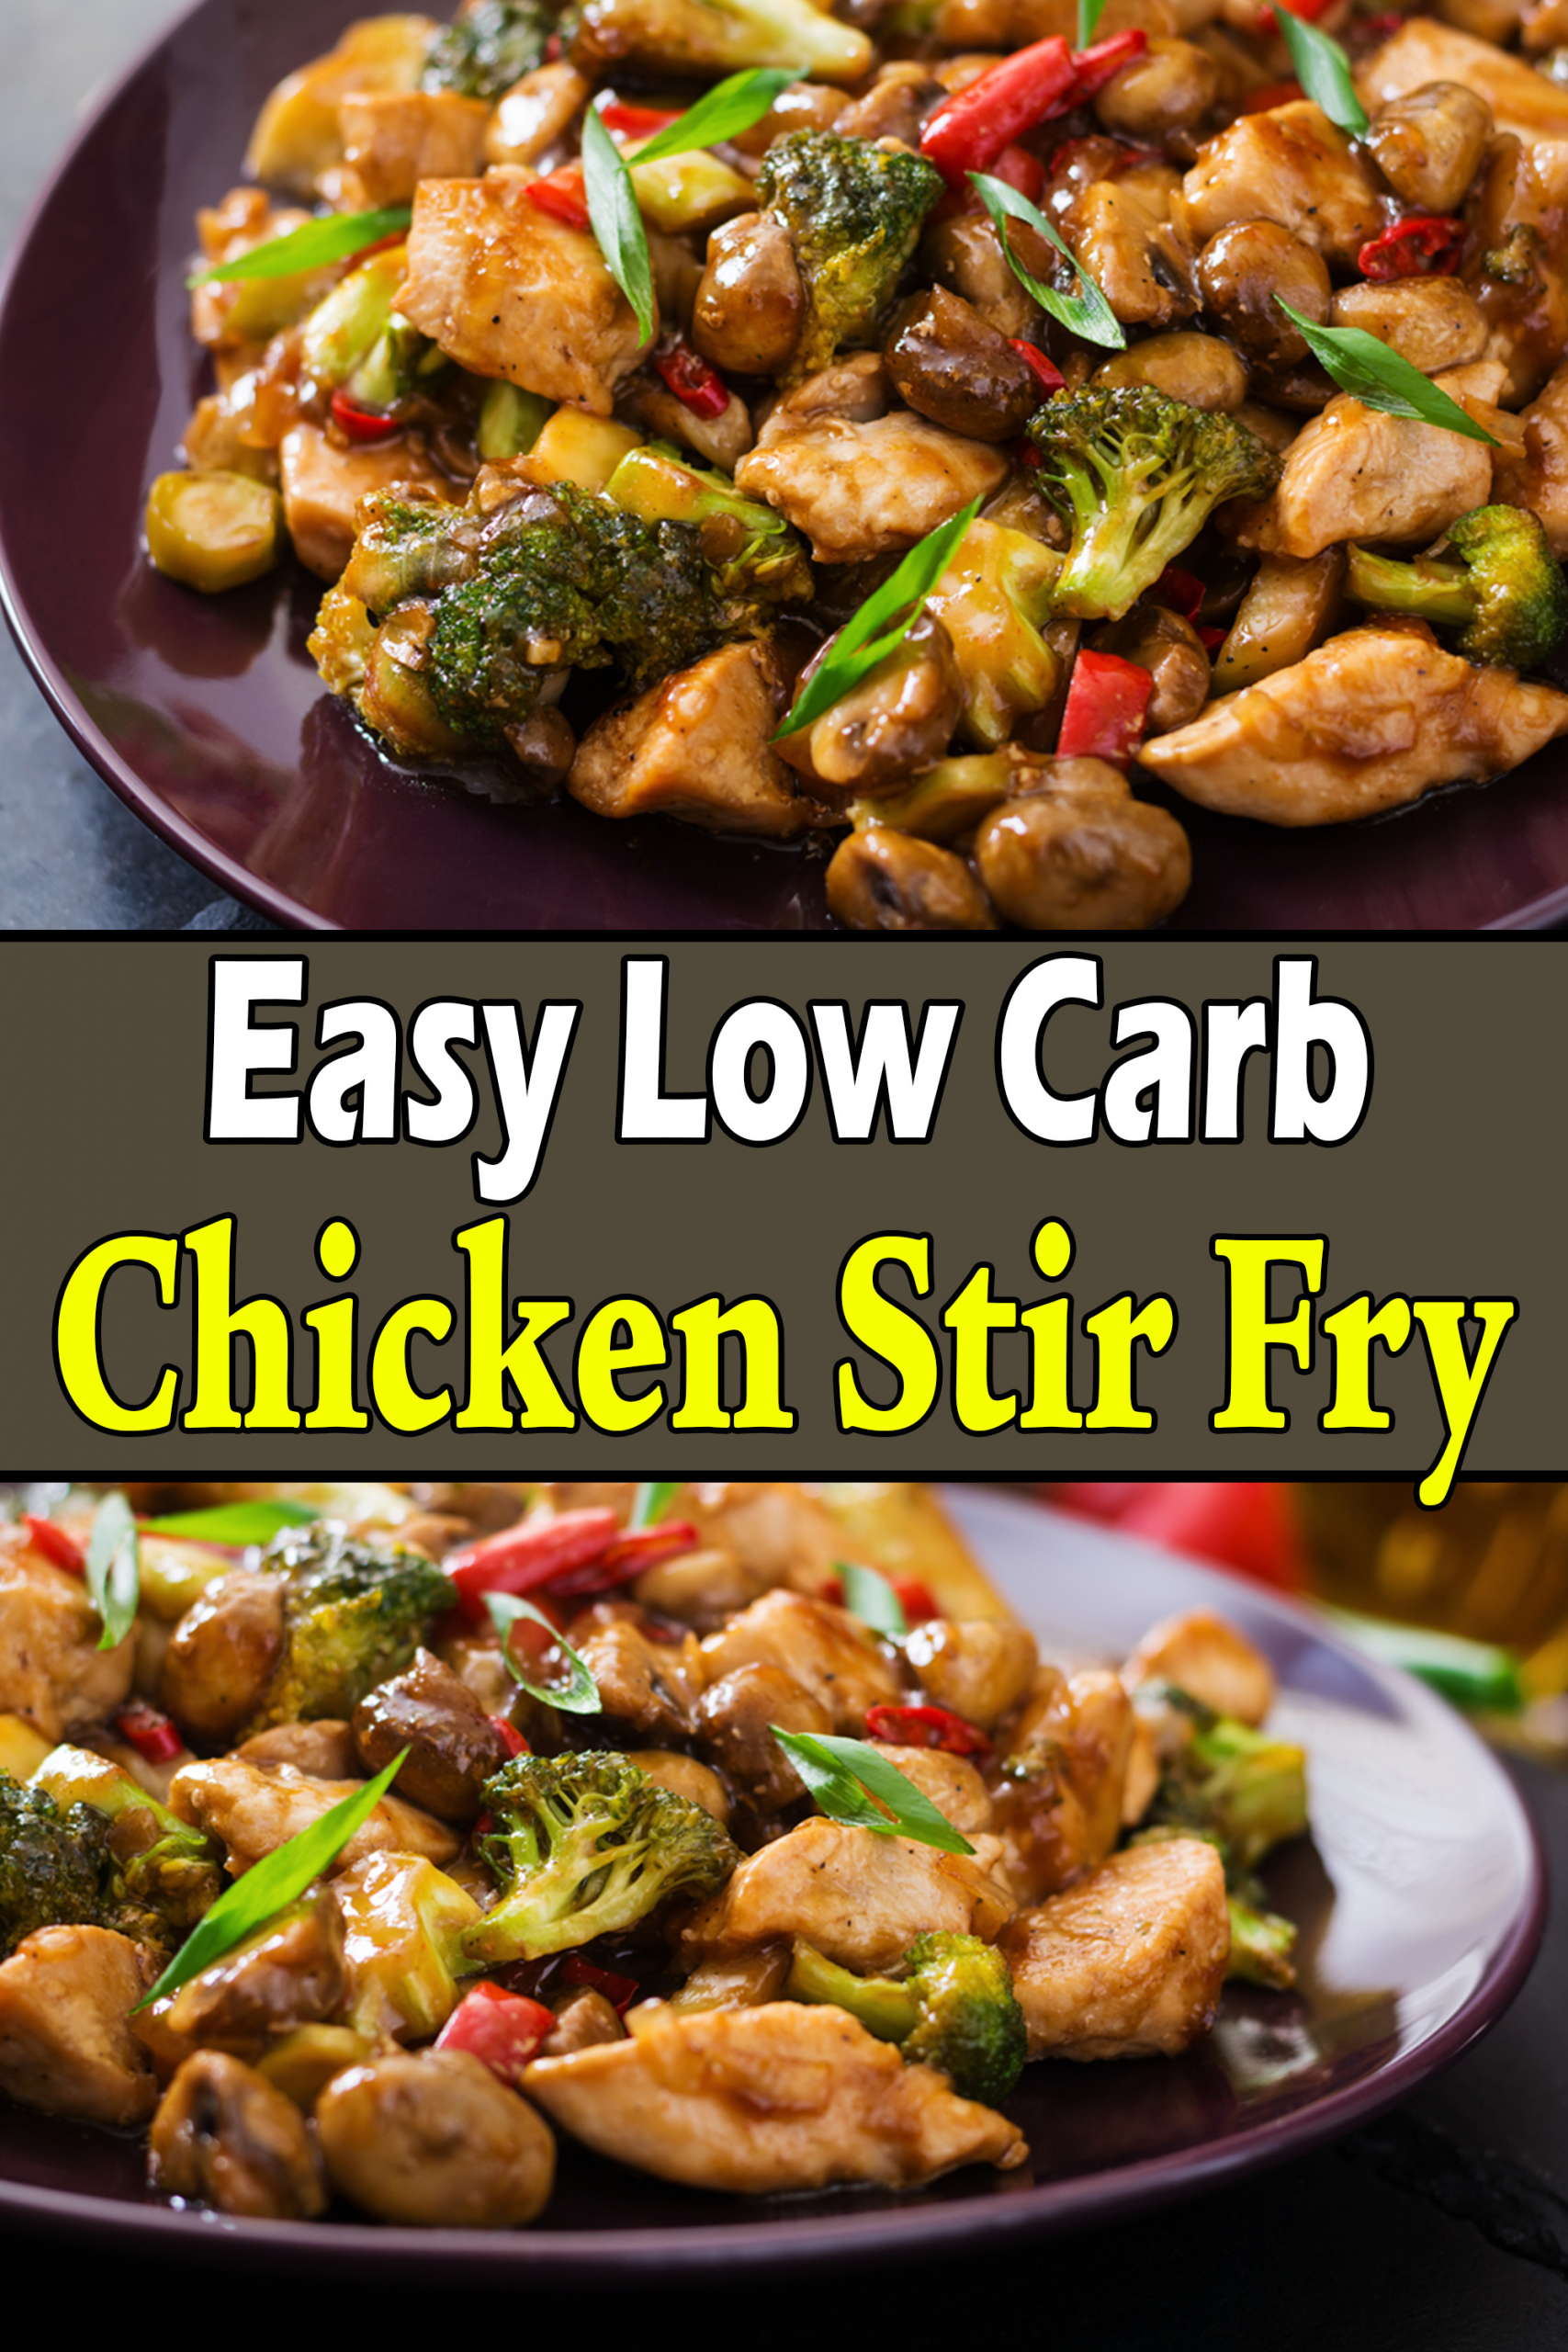 Low Carb Chicken Stir Fry Recipes
 Keto Chicken Stir Fry Low Carb Recipe